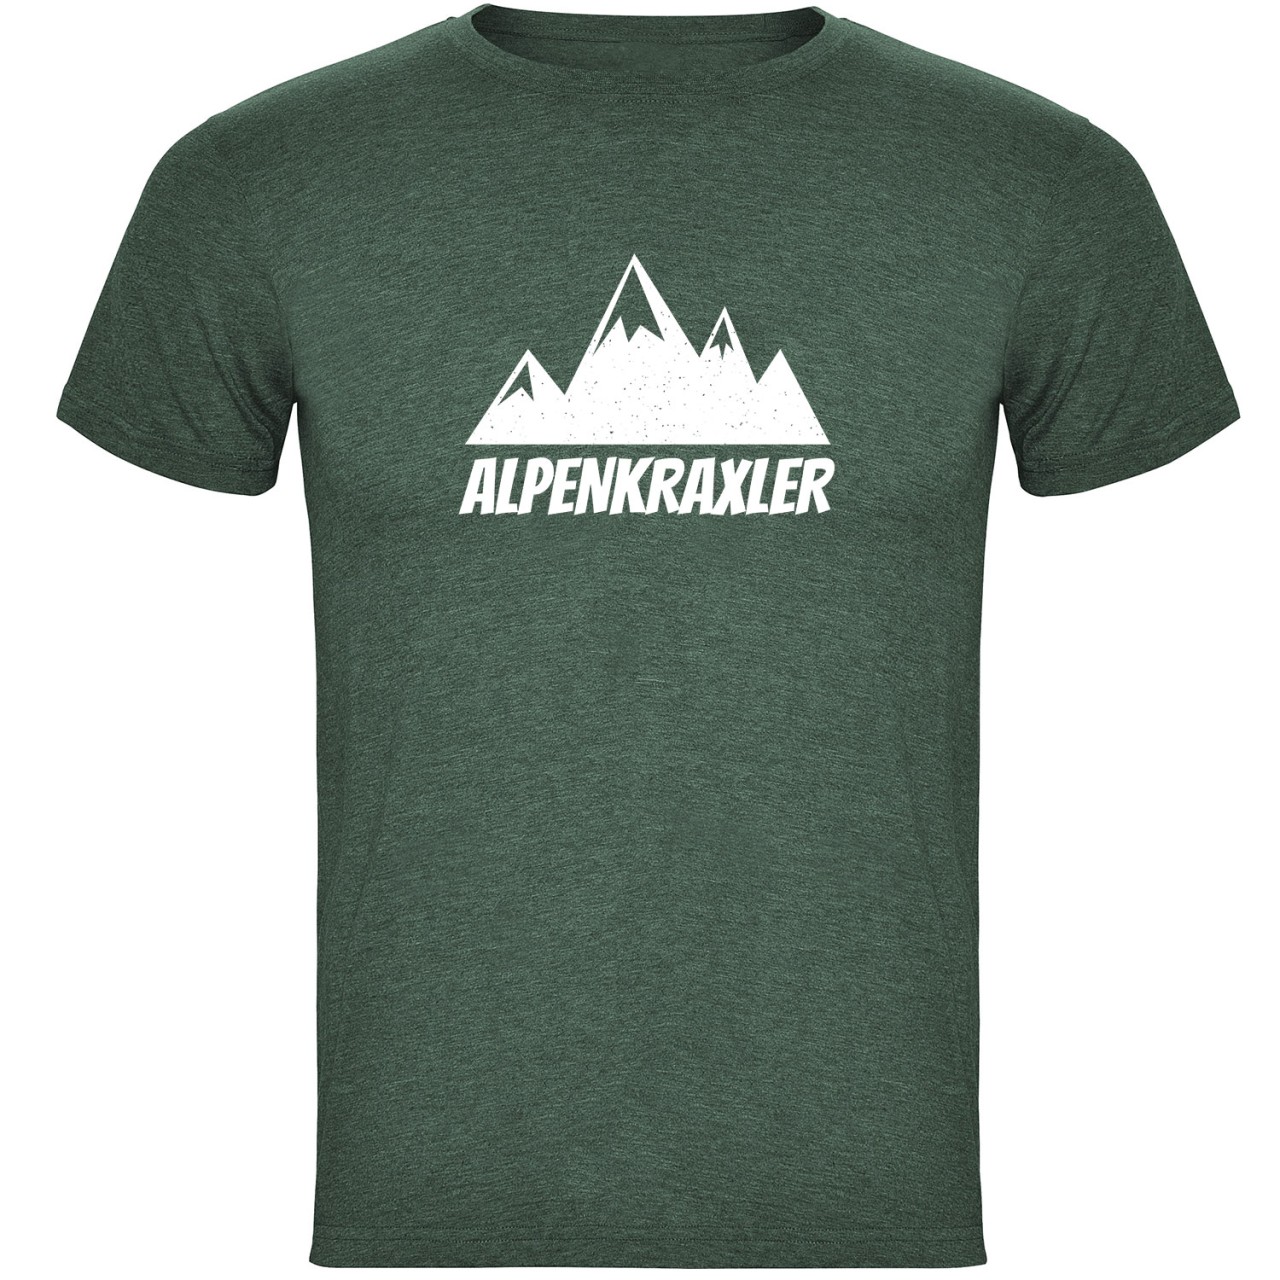 Alpenkraxler Herren T-shirt